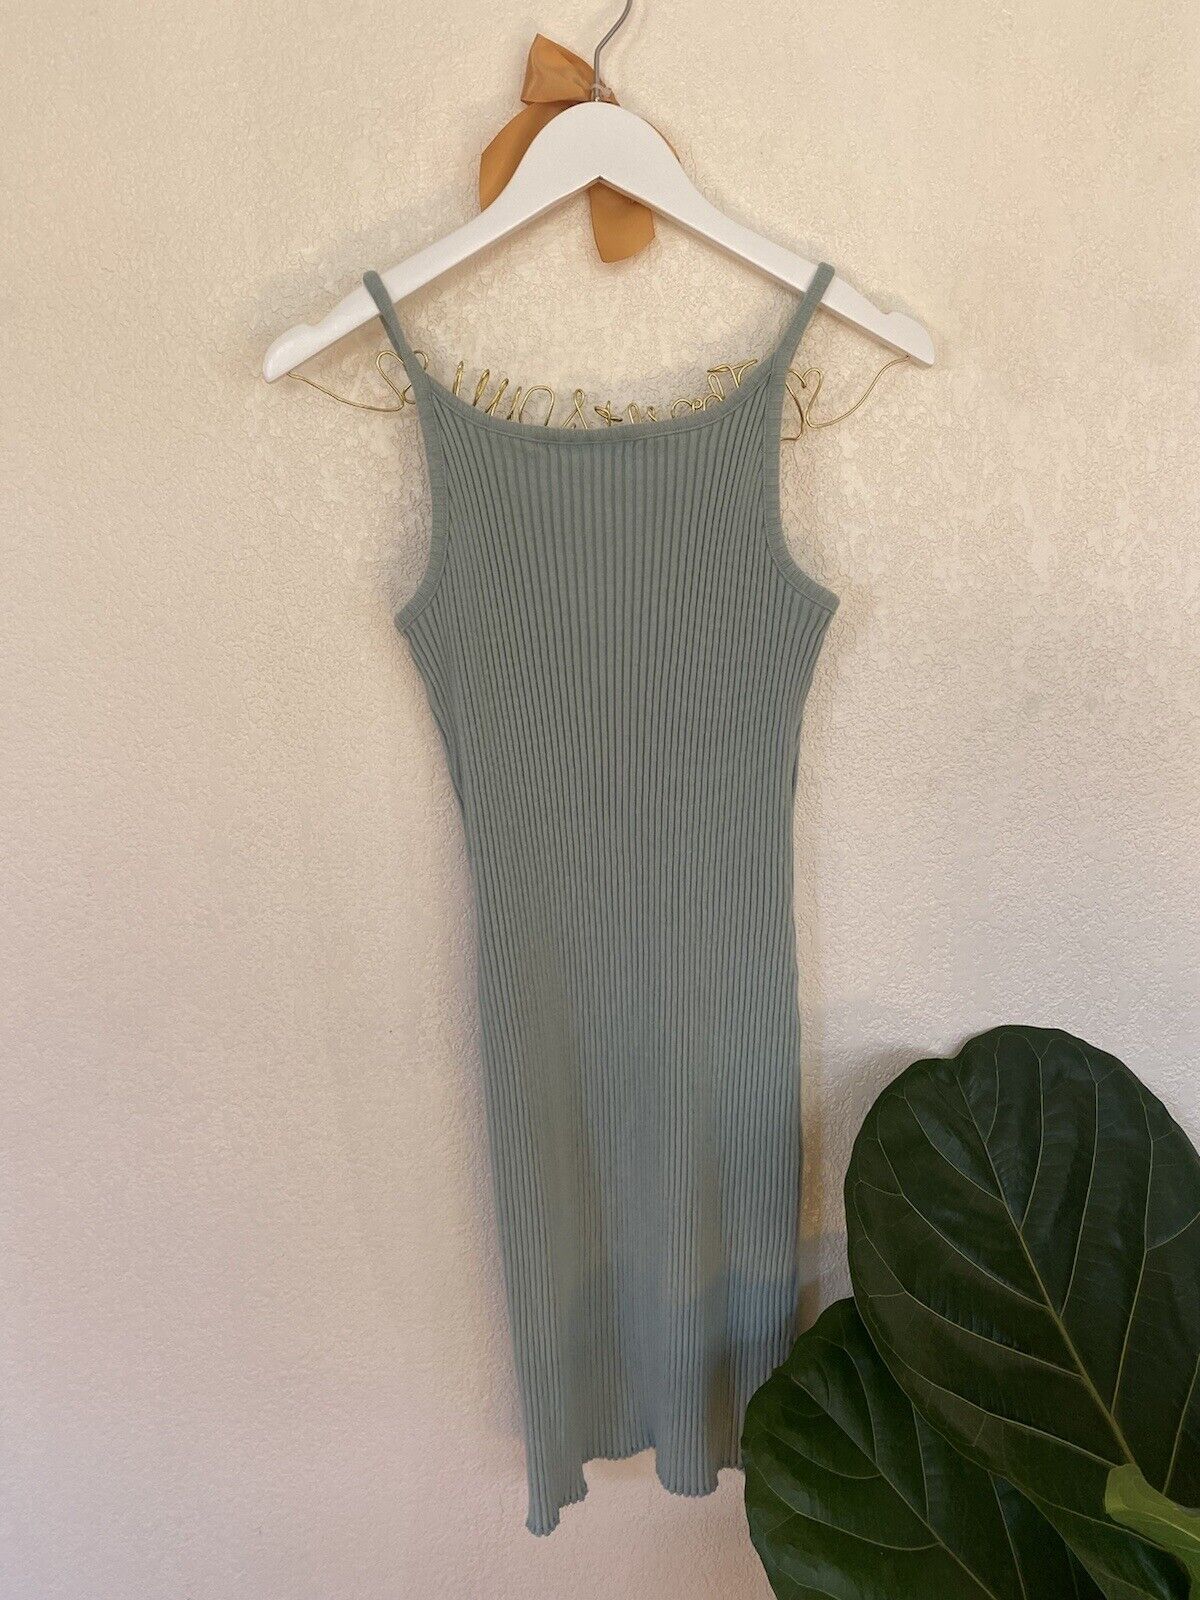 Sage Green Knit Bodycon Dress - Newport News - Women’s Large